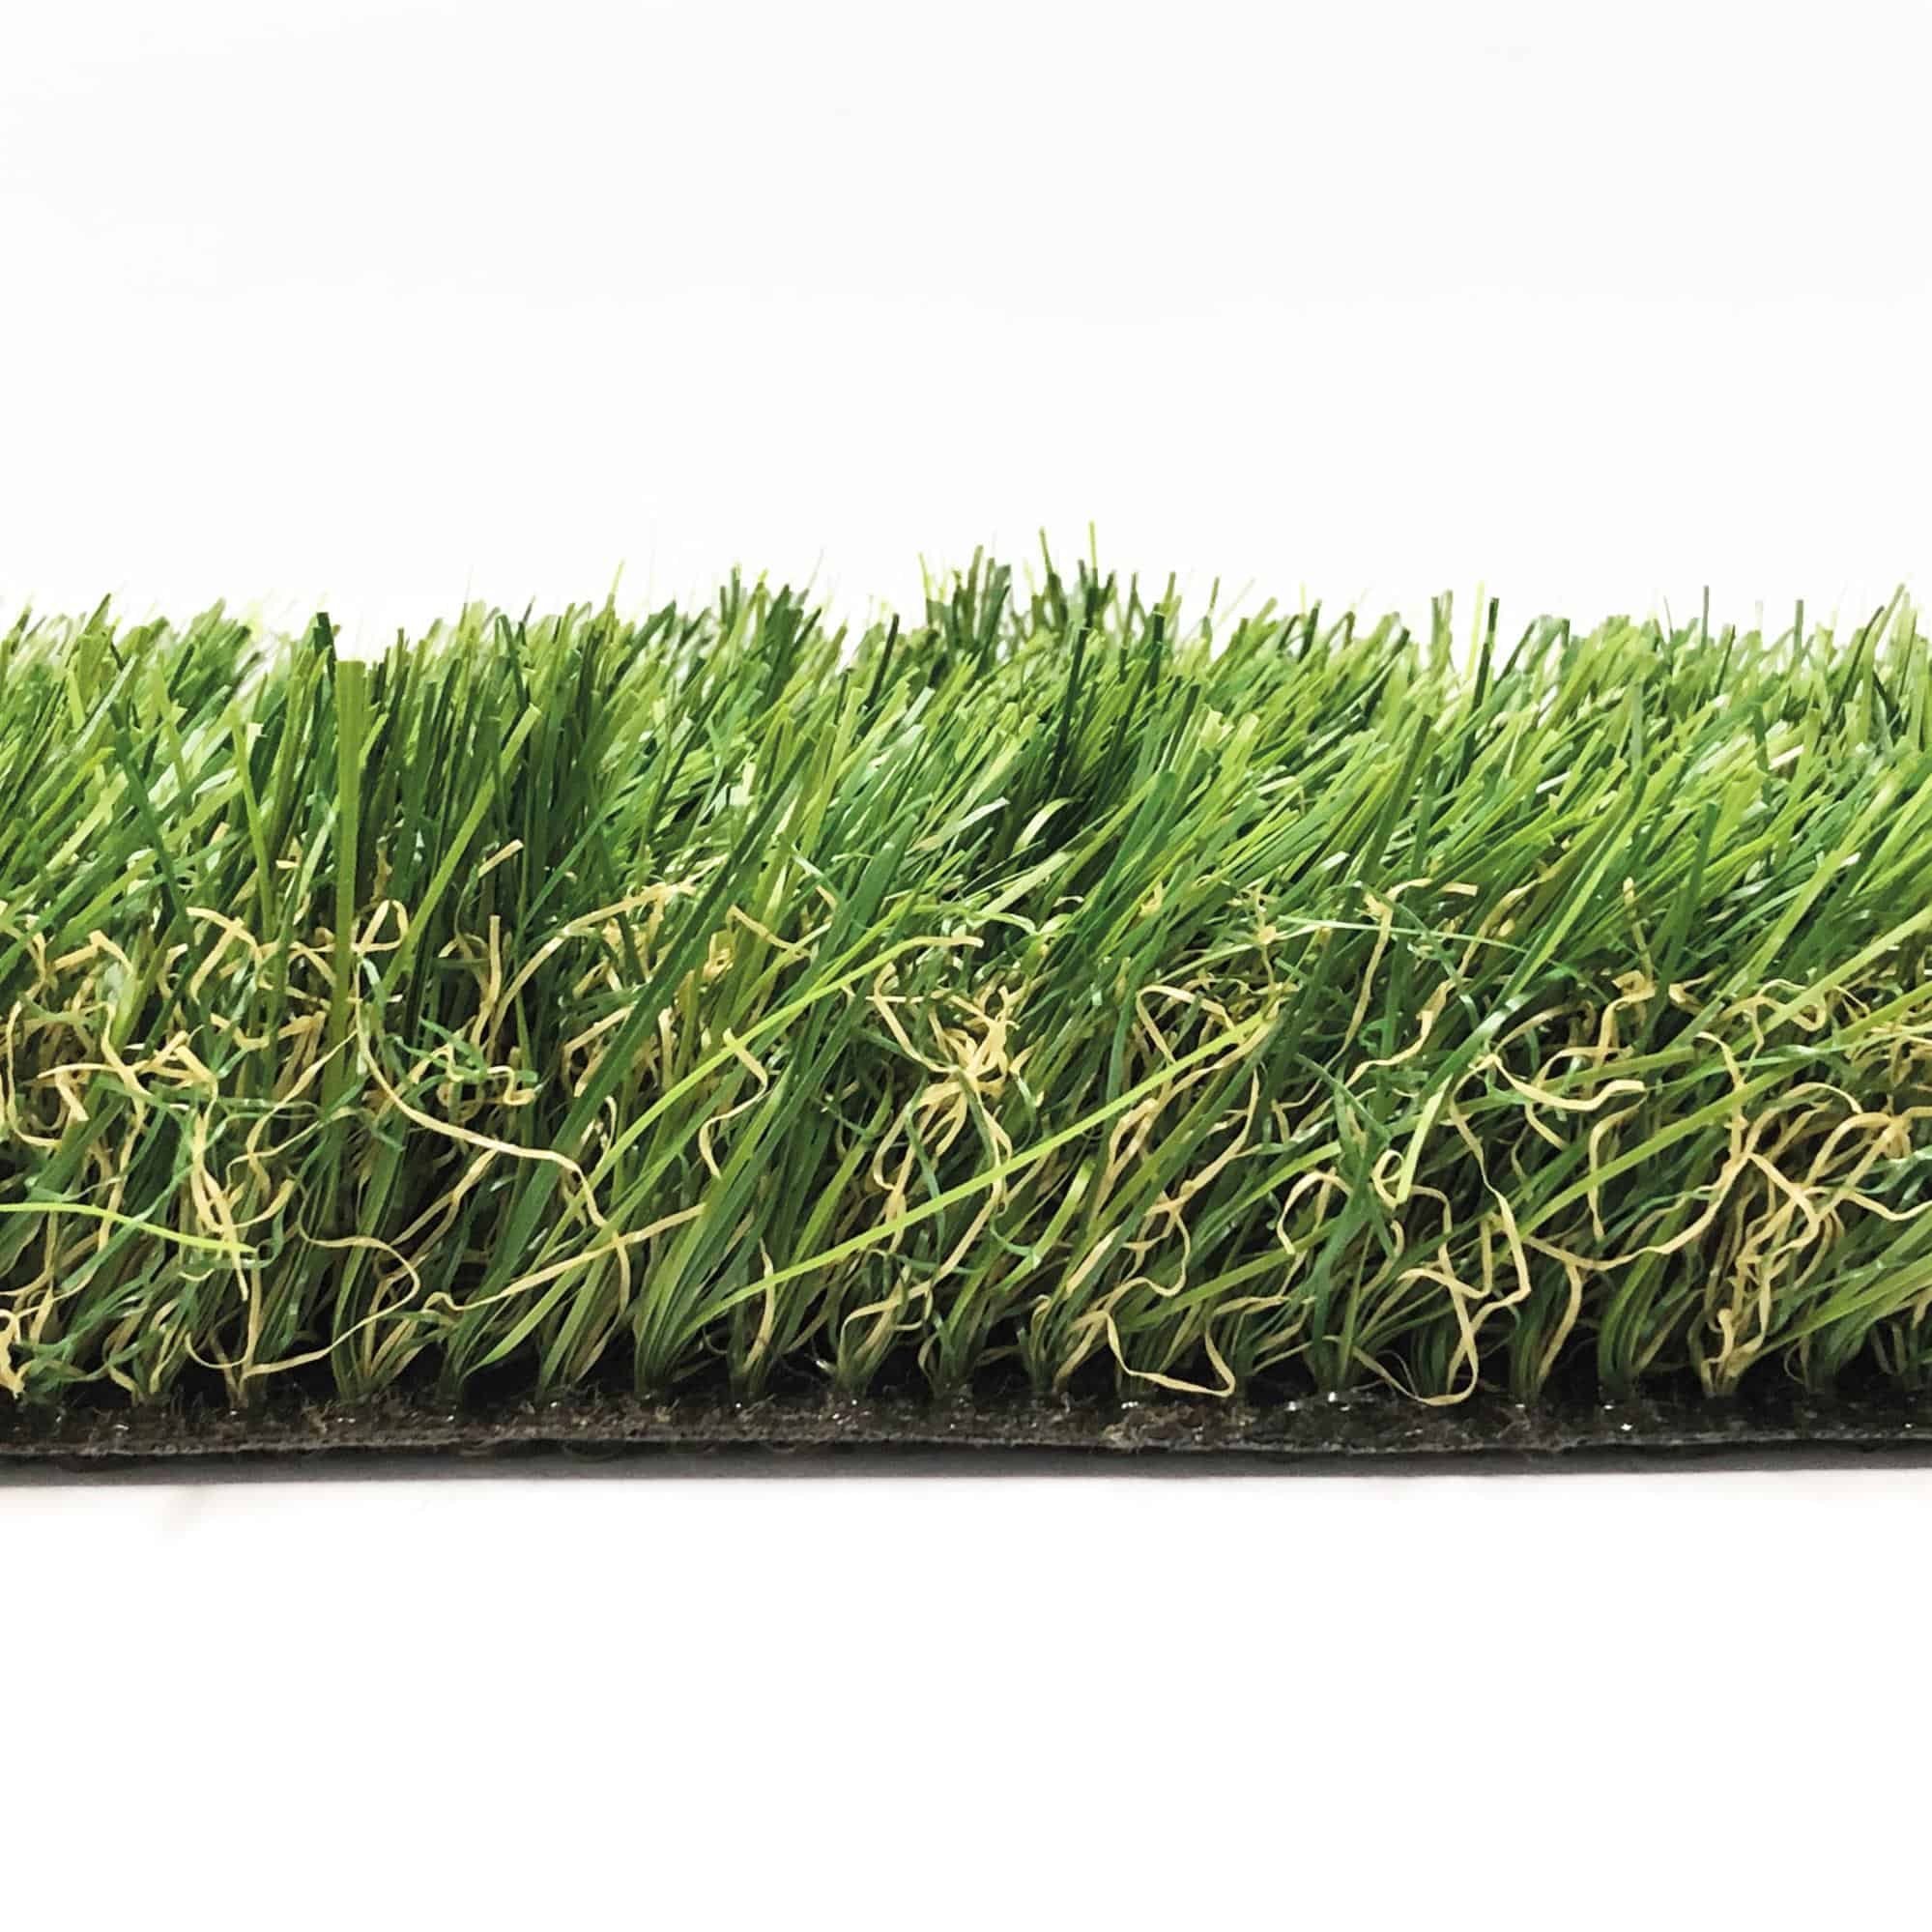 CORE Lawn Natural Artificial Grass 4m Wide Roll 4 m